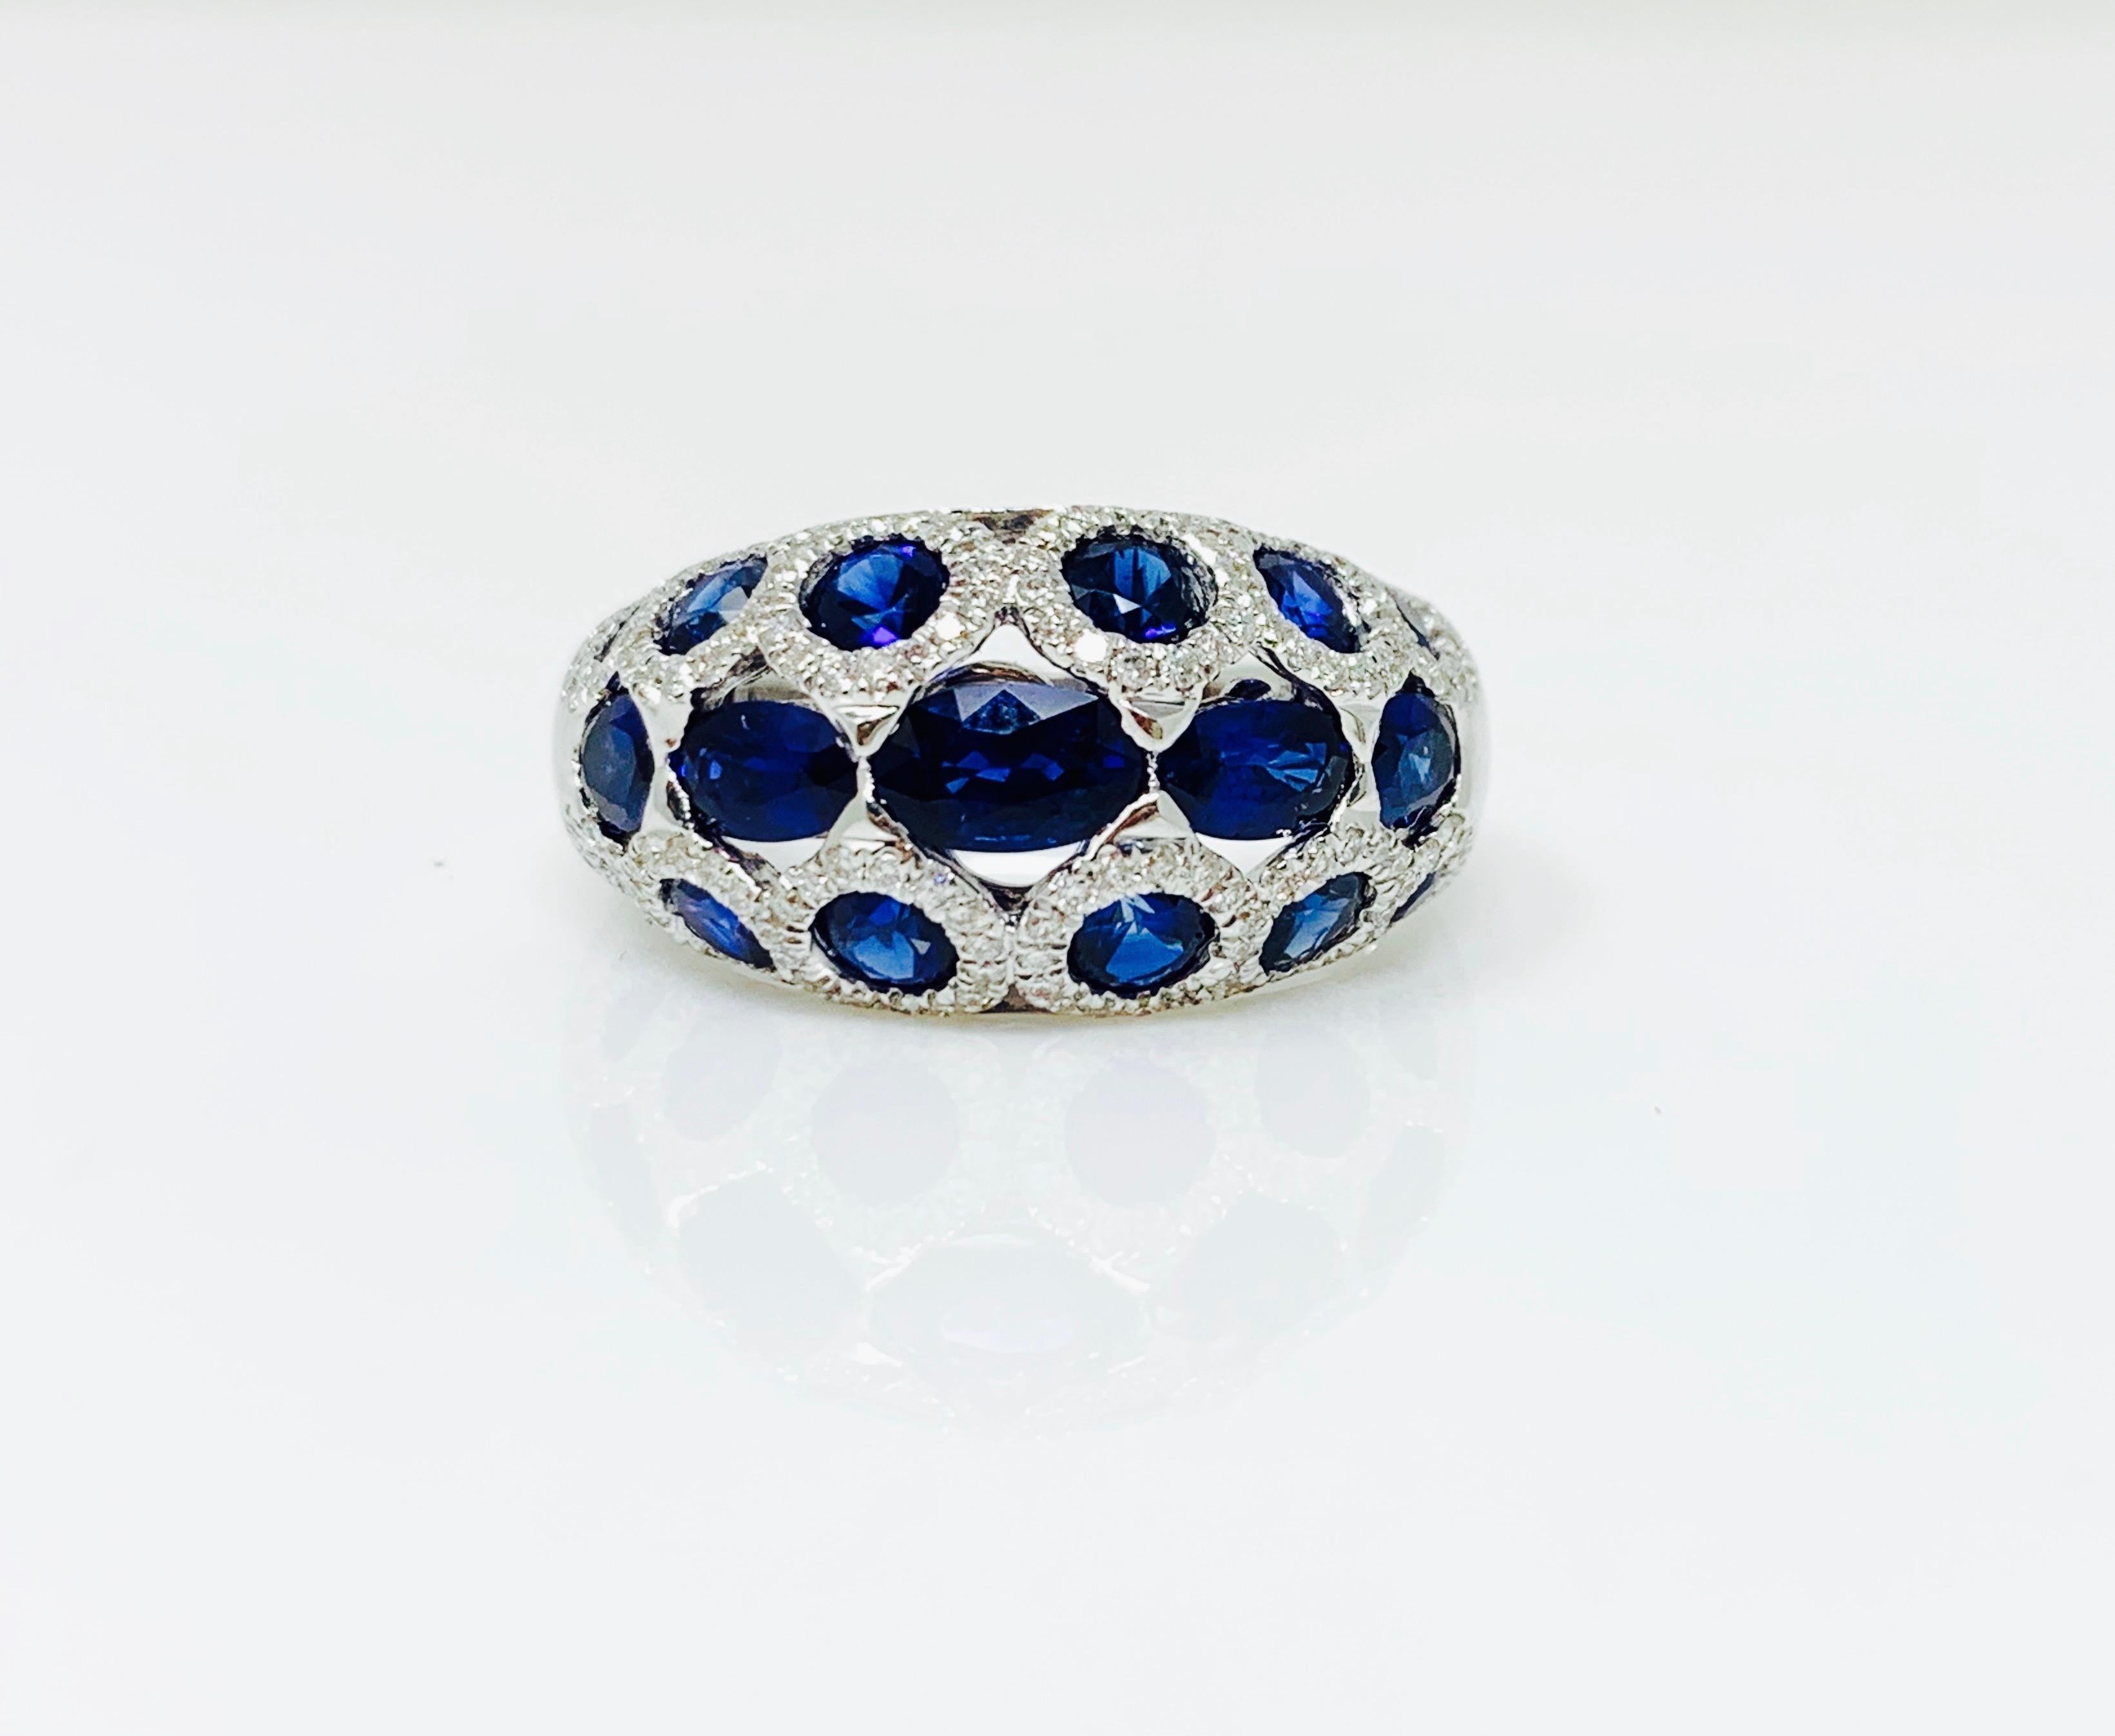 MOGULDIAM INC blue sapphire and diamond cocktail ring beautifully handmade in 18K white gold. 
Blue sapphire weight : 2.78 carat 
Diamond weight : 0.42 carat 
Metal : 18k 
Ring size : 6 1/2 